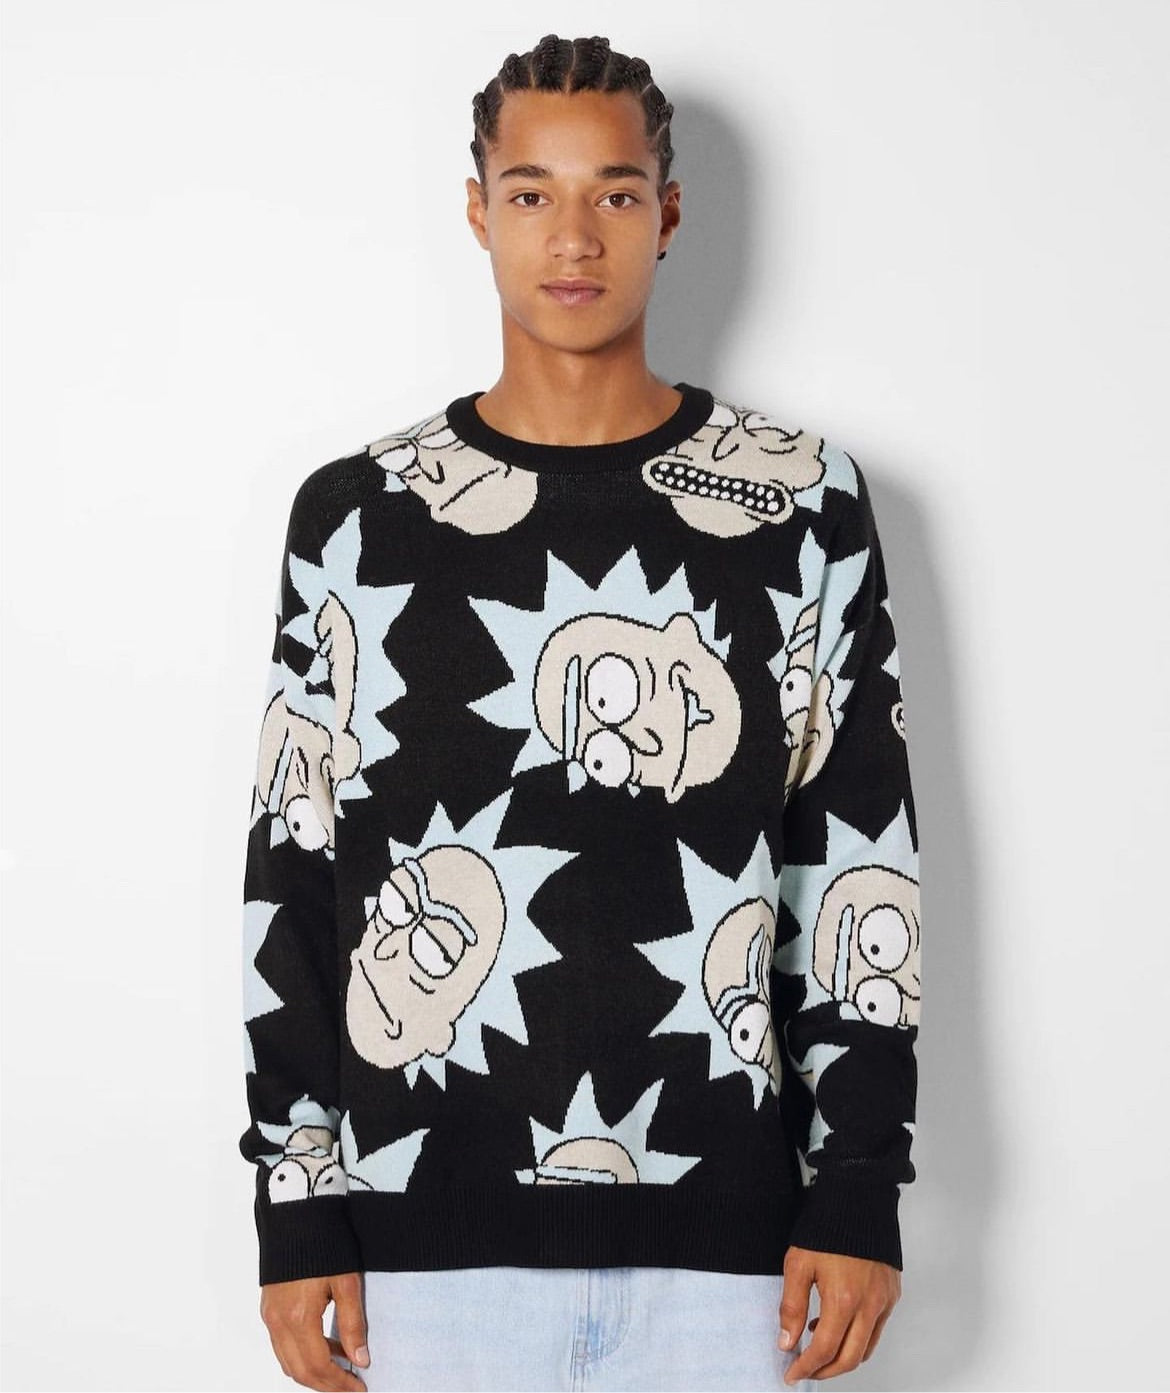 Rick and morty sweater – Zedekenterprise